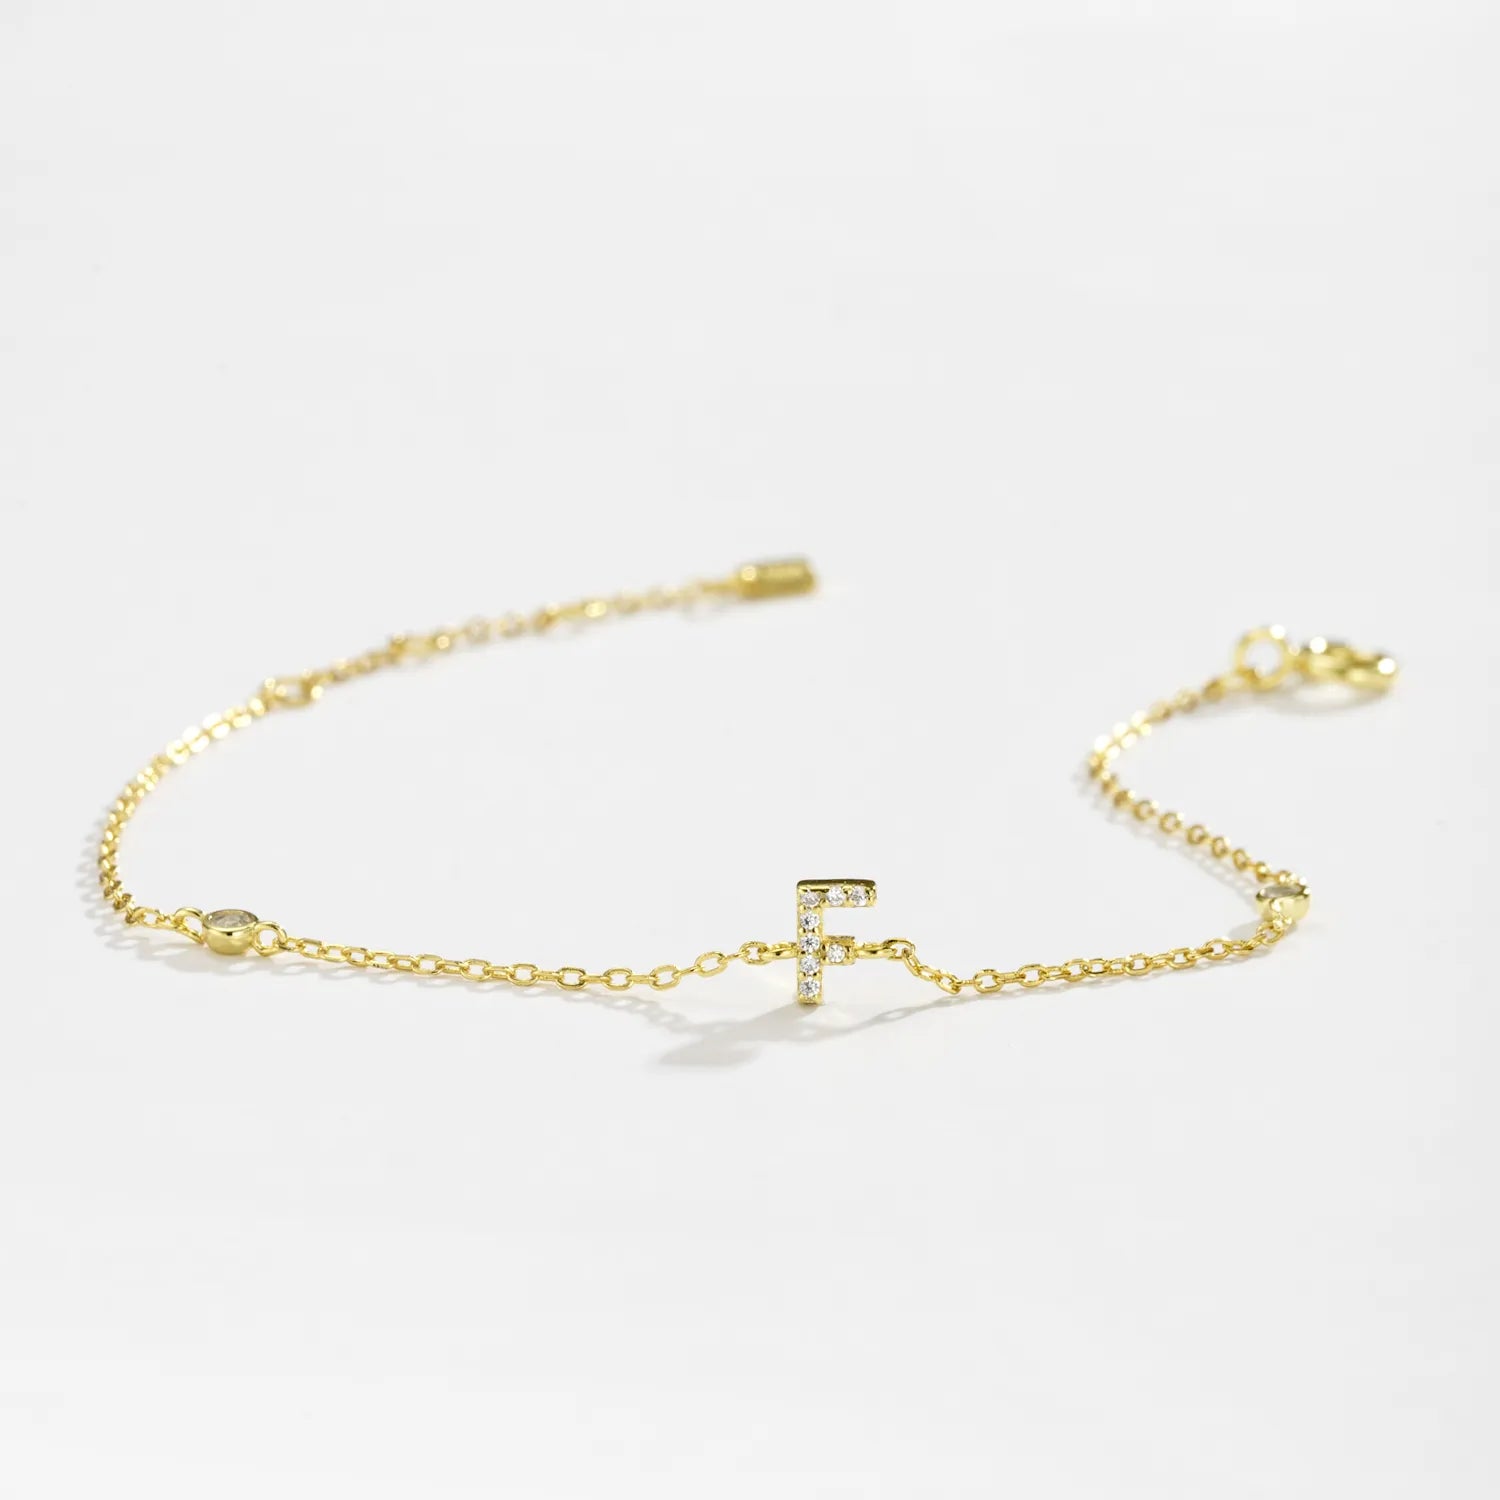 A-Z Initial Love Bracelet